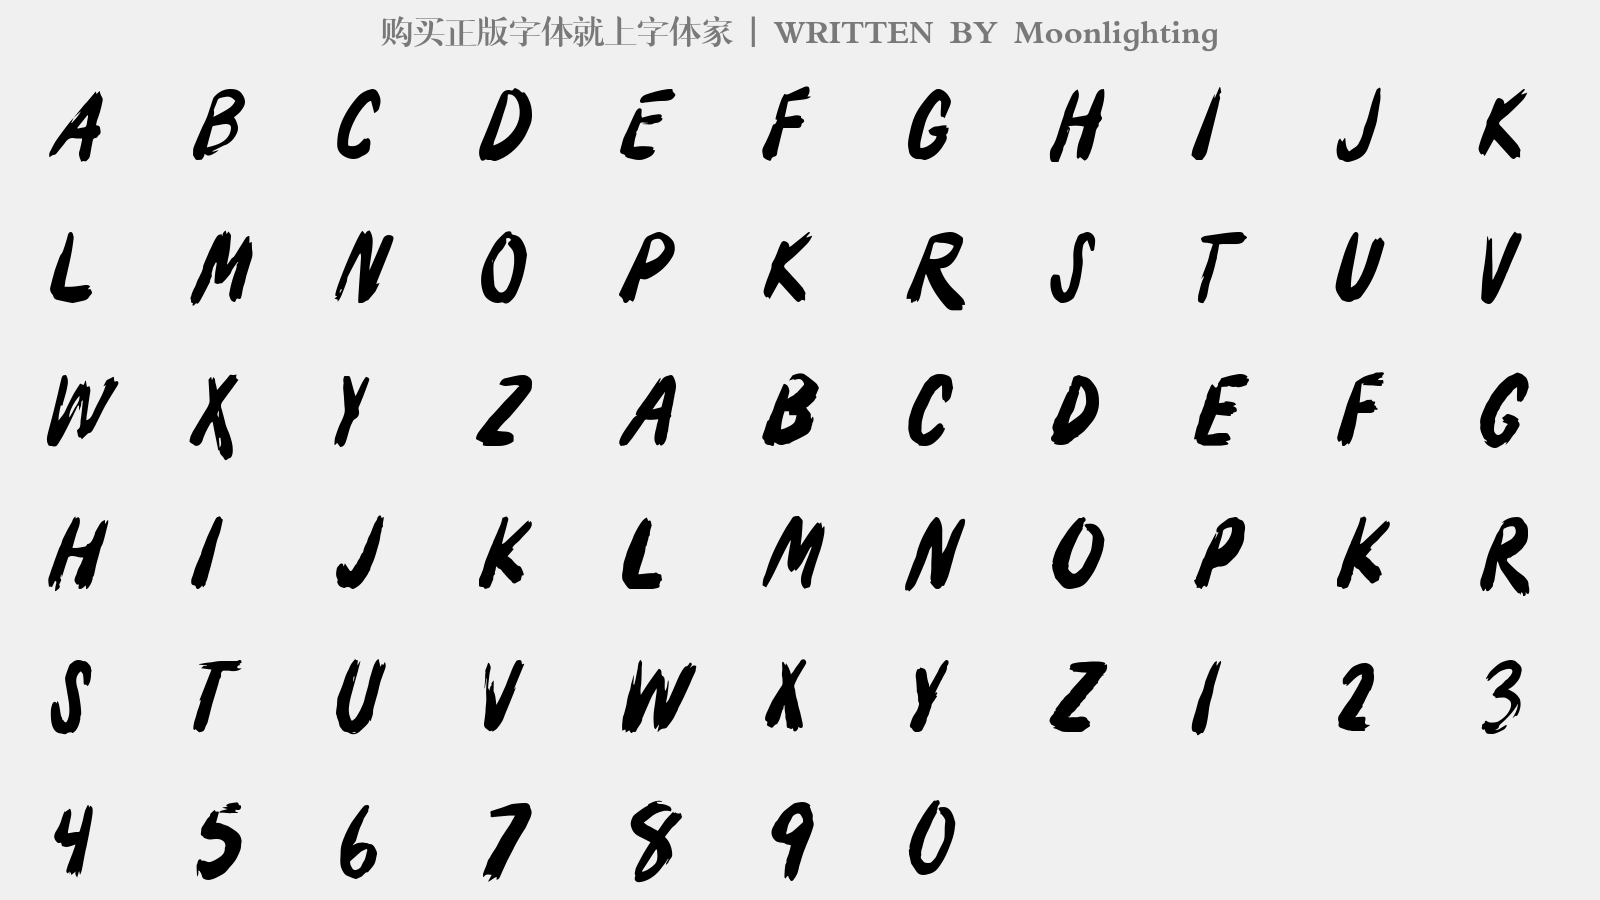 Moonlighting - 大写字母/小写字母/数字